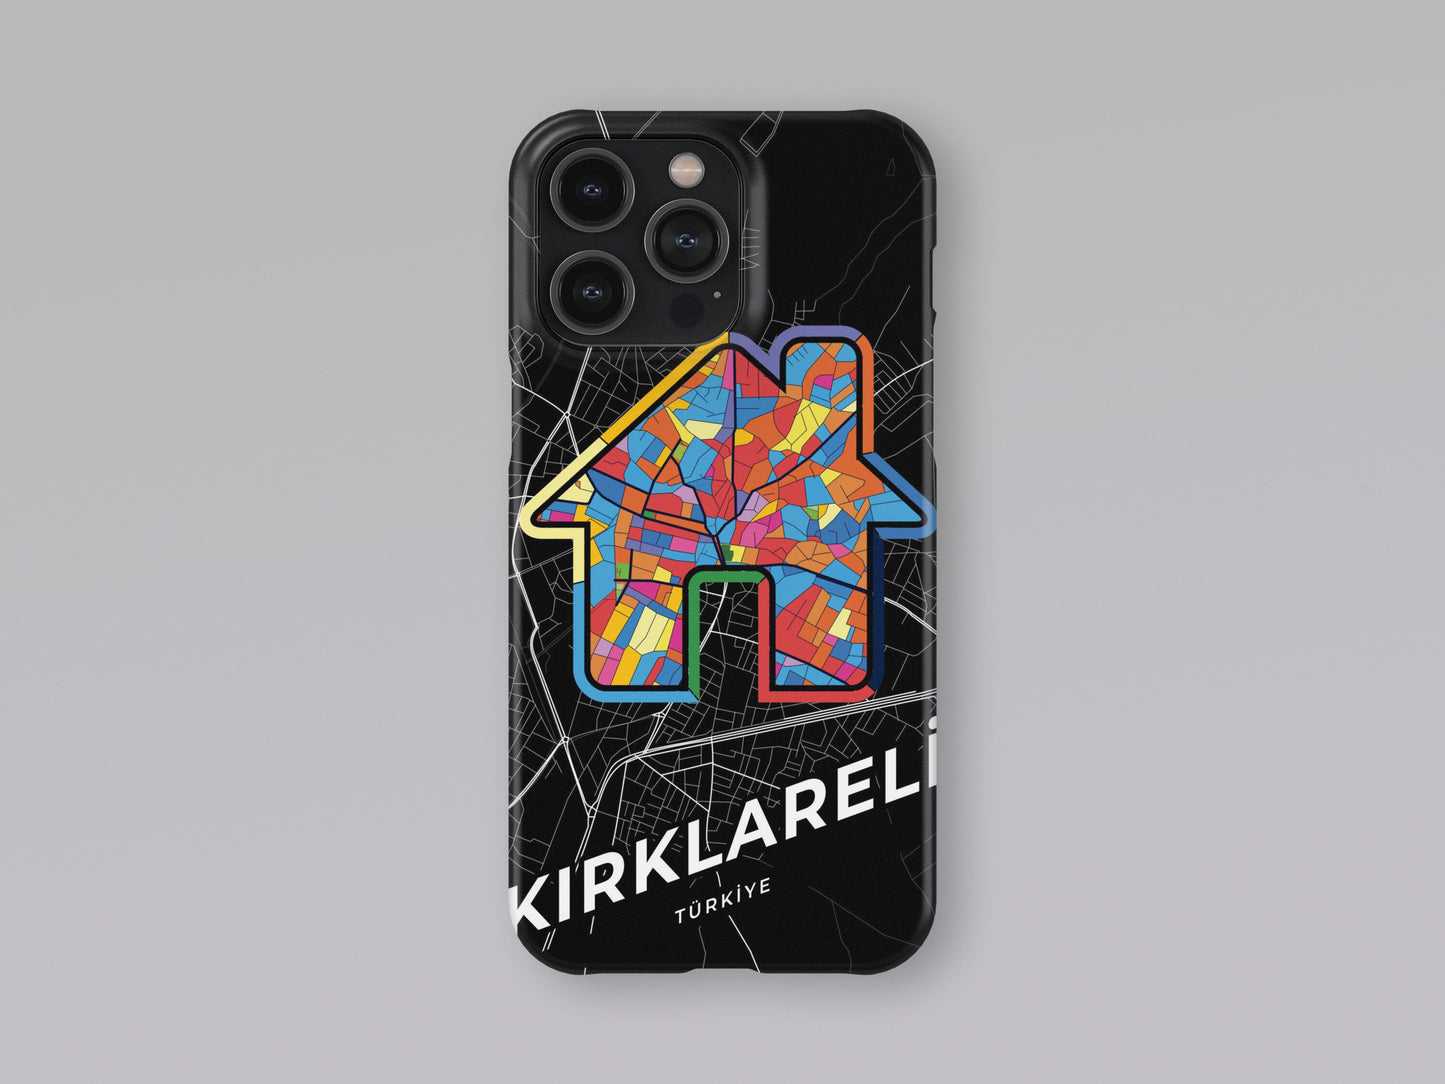 Kırklareli Turkey slim phone case with colorful icon. Birthday, wedding or housewarming gift. Couple match cases. 3